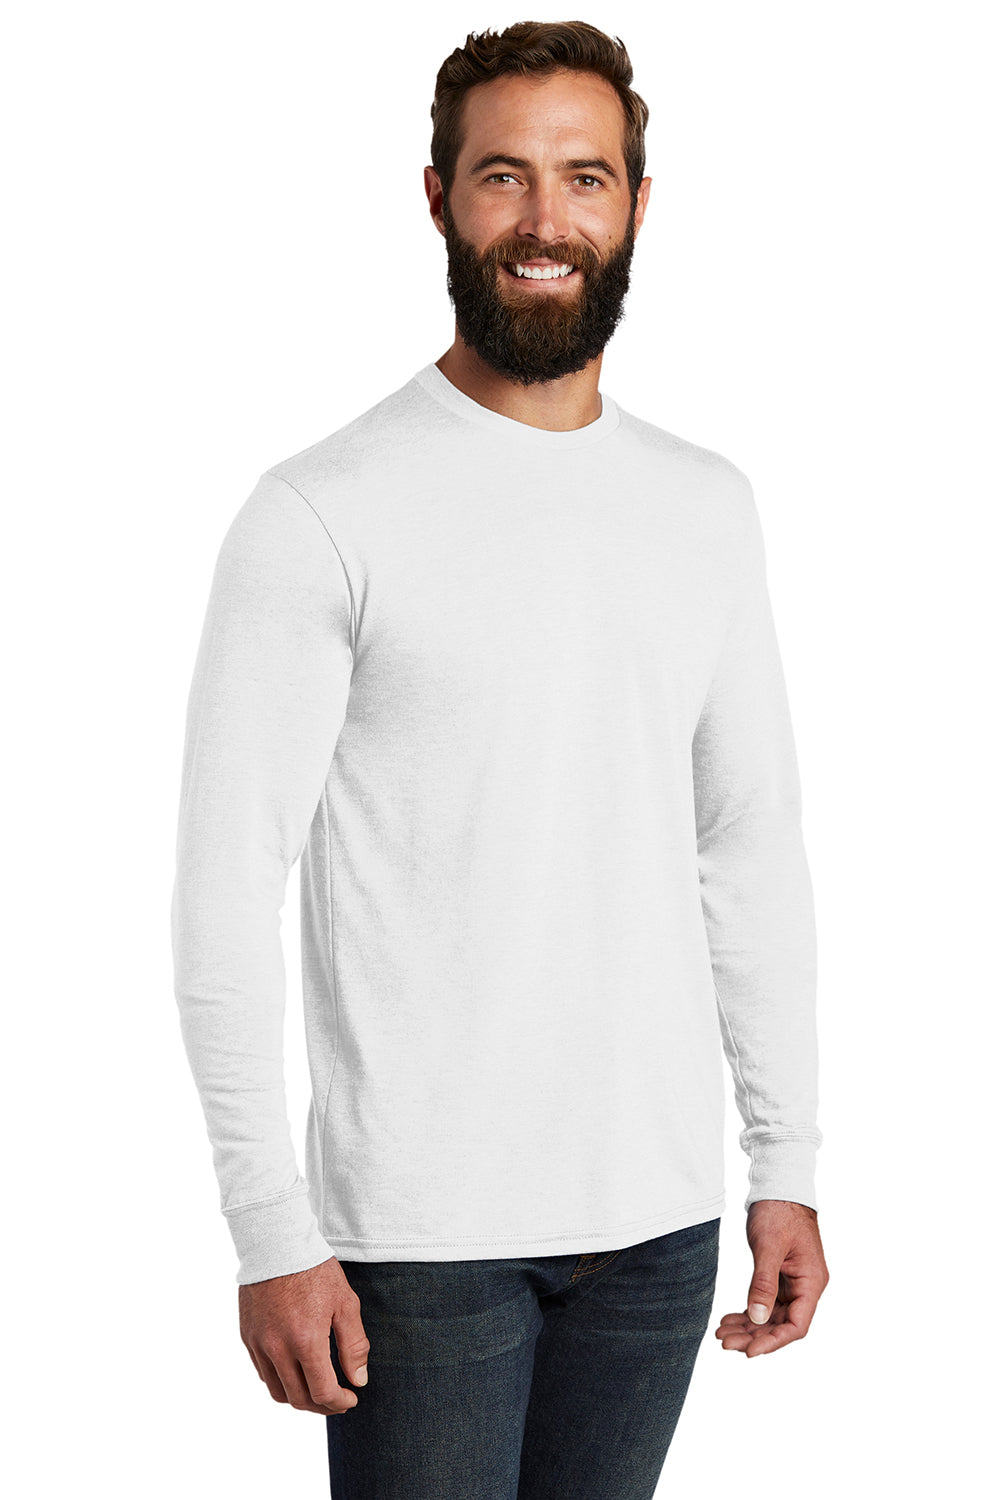 Allmade AL6004 Mens Long Sleeve Crewneck T-Shirt Bright White Model 3Q